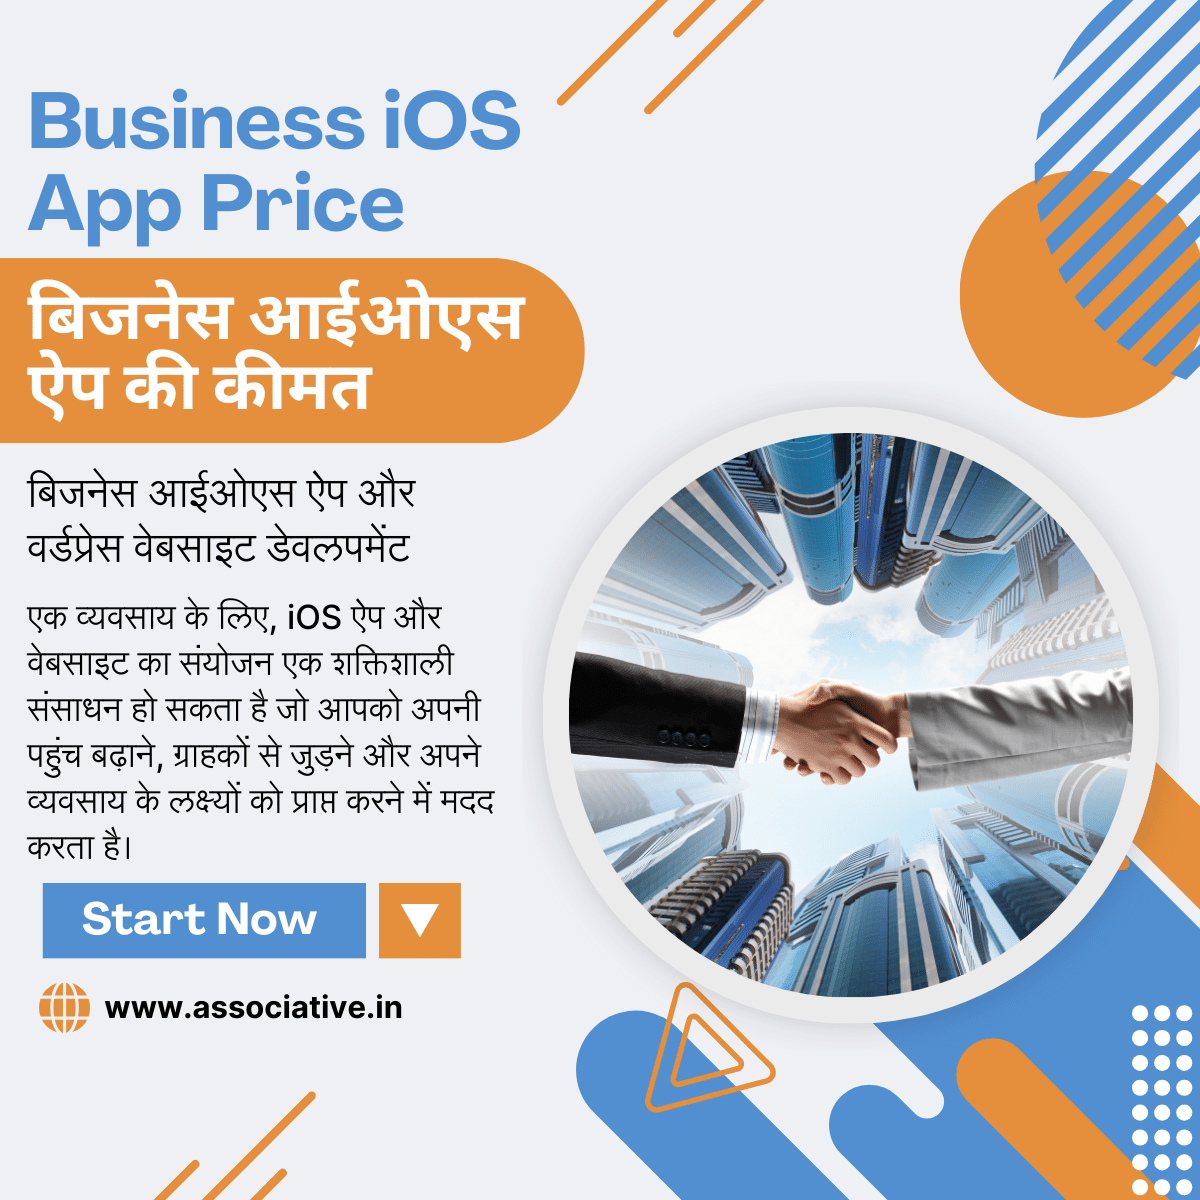 Business iOS App Price
बिजनेस आईओएस ऐप की कीमत